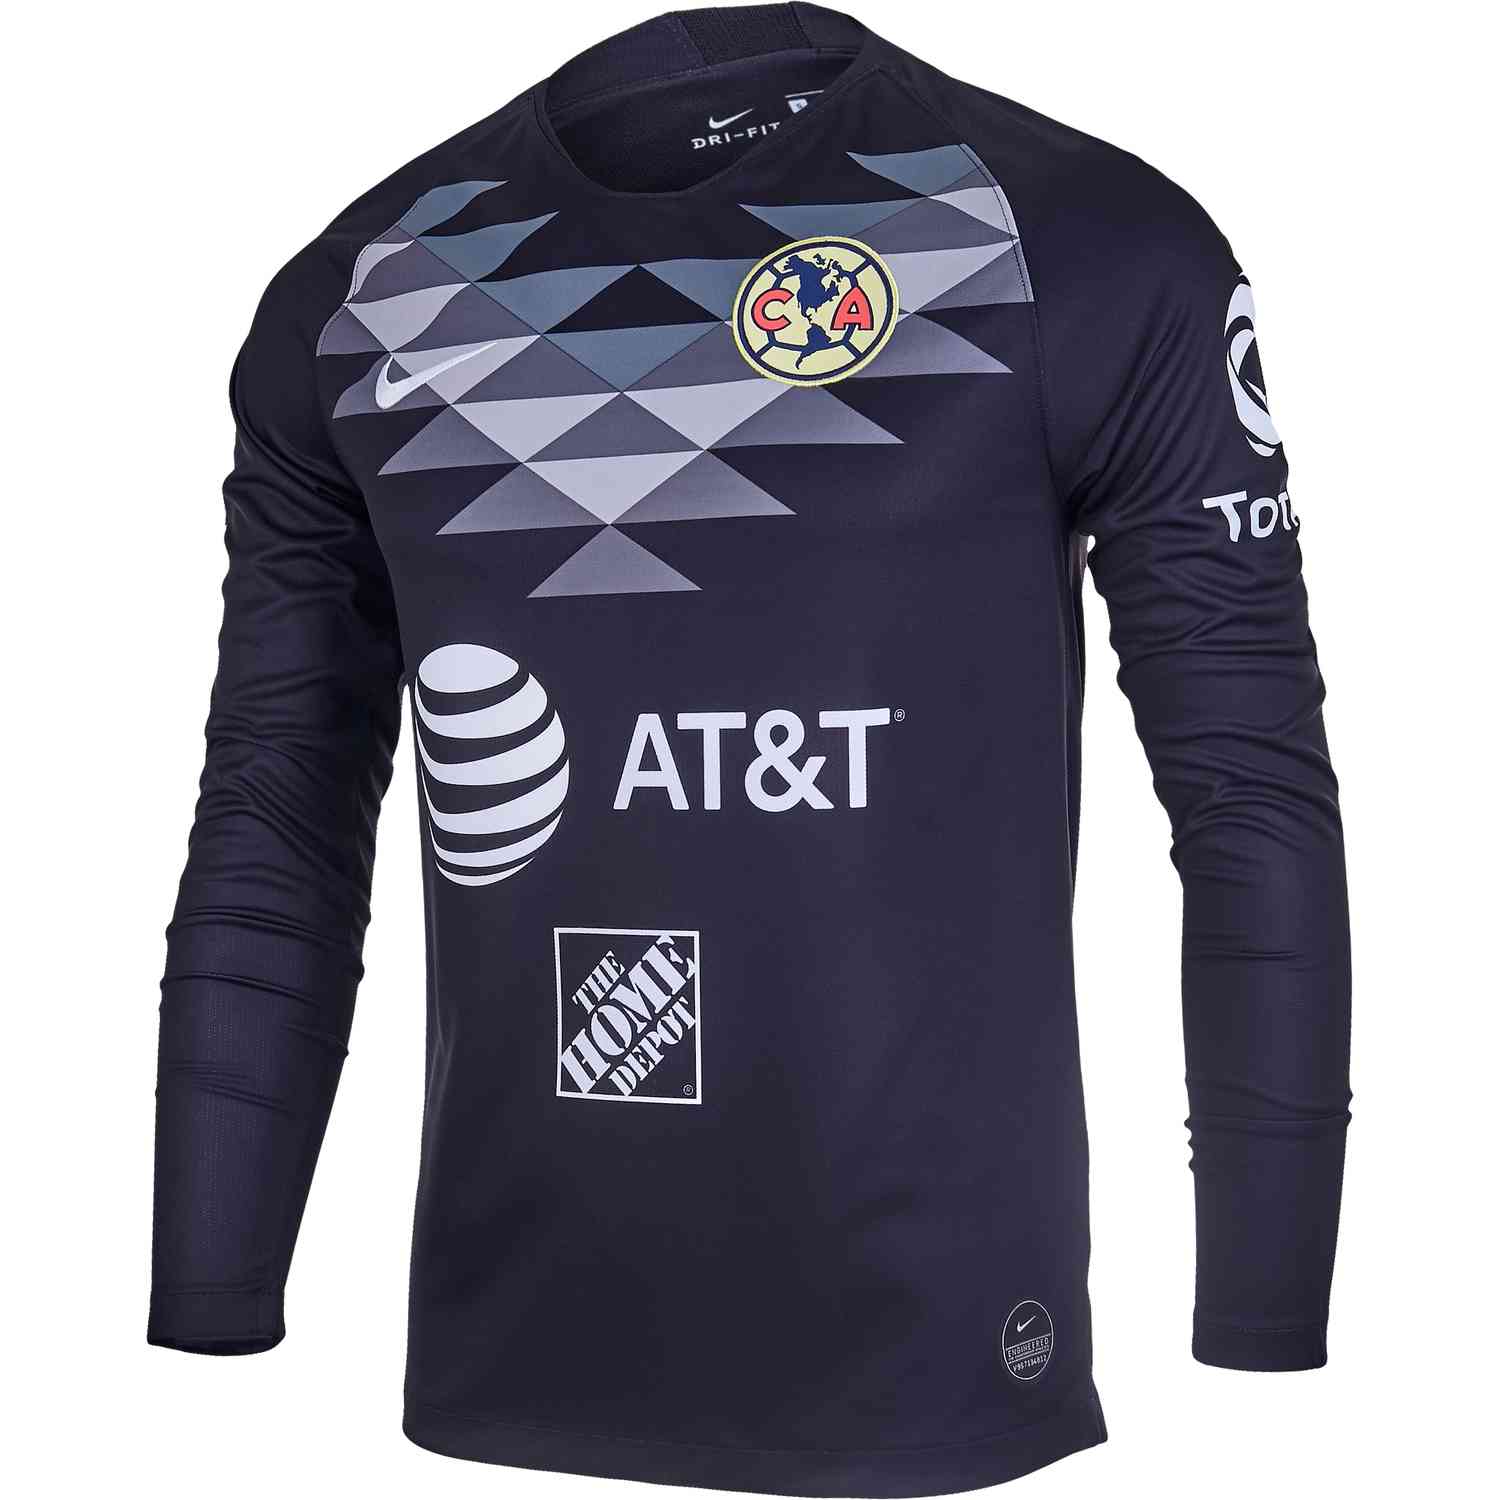 club america jersey 2019